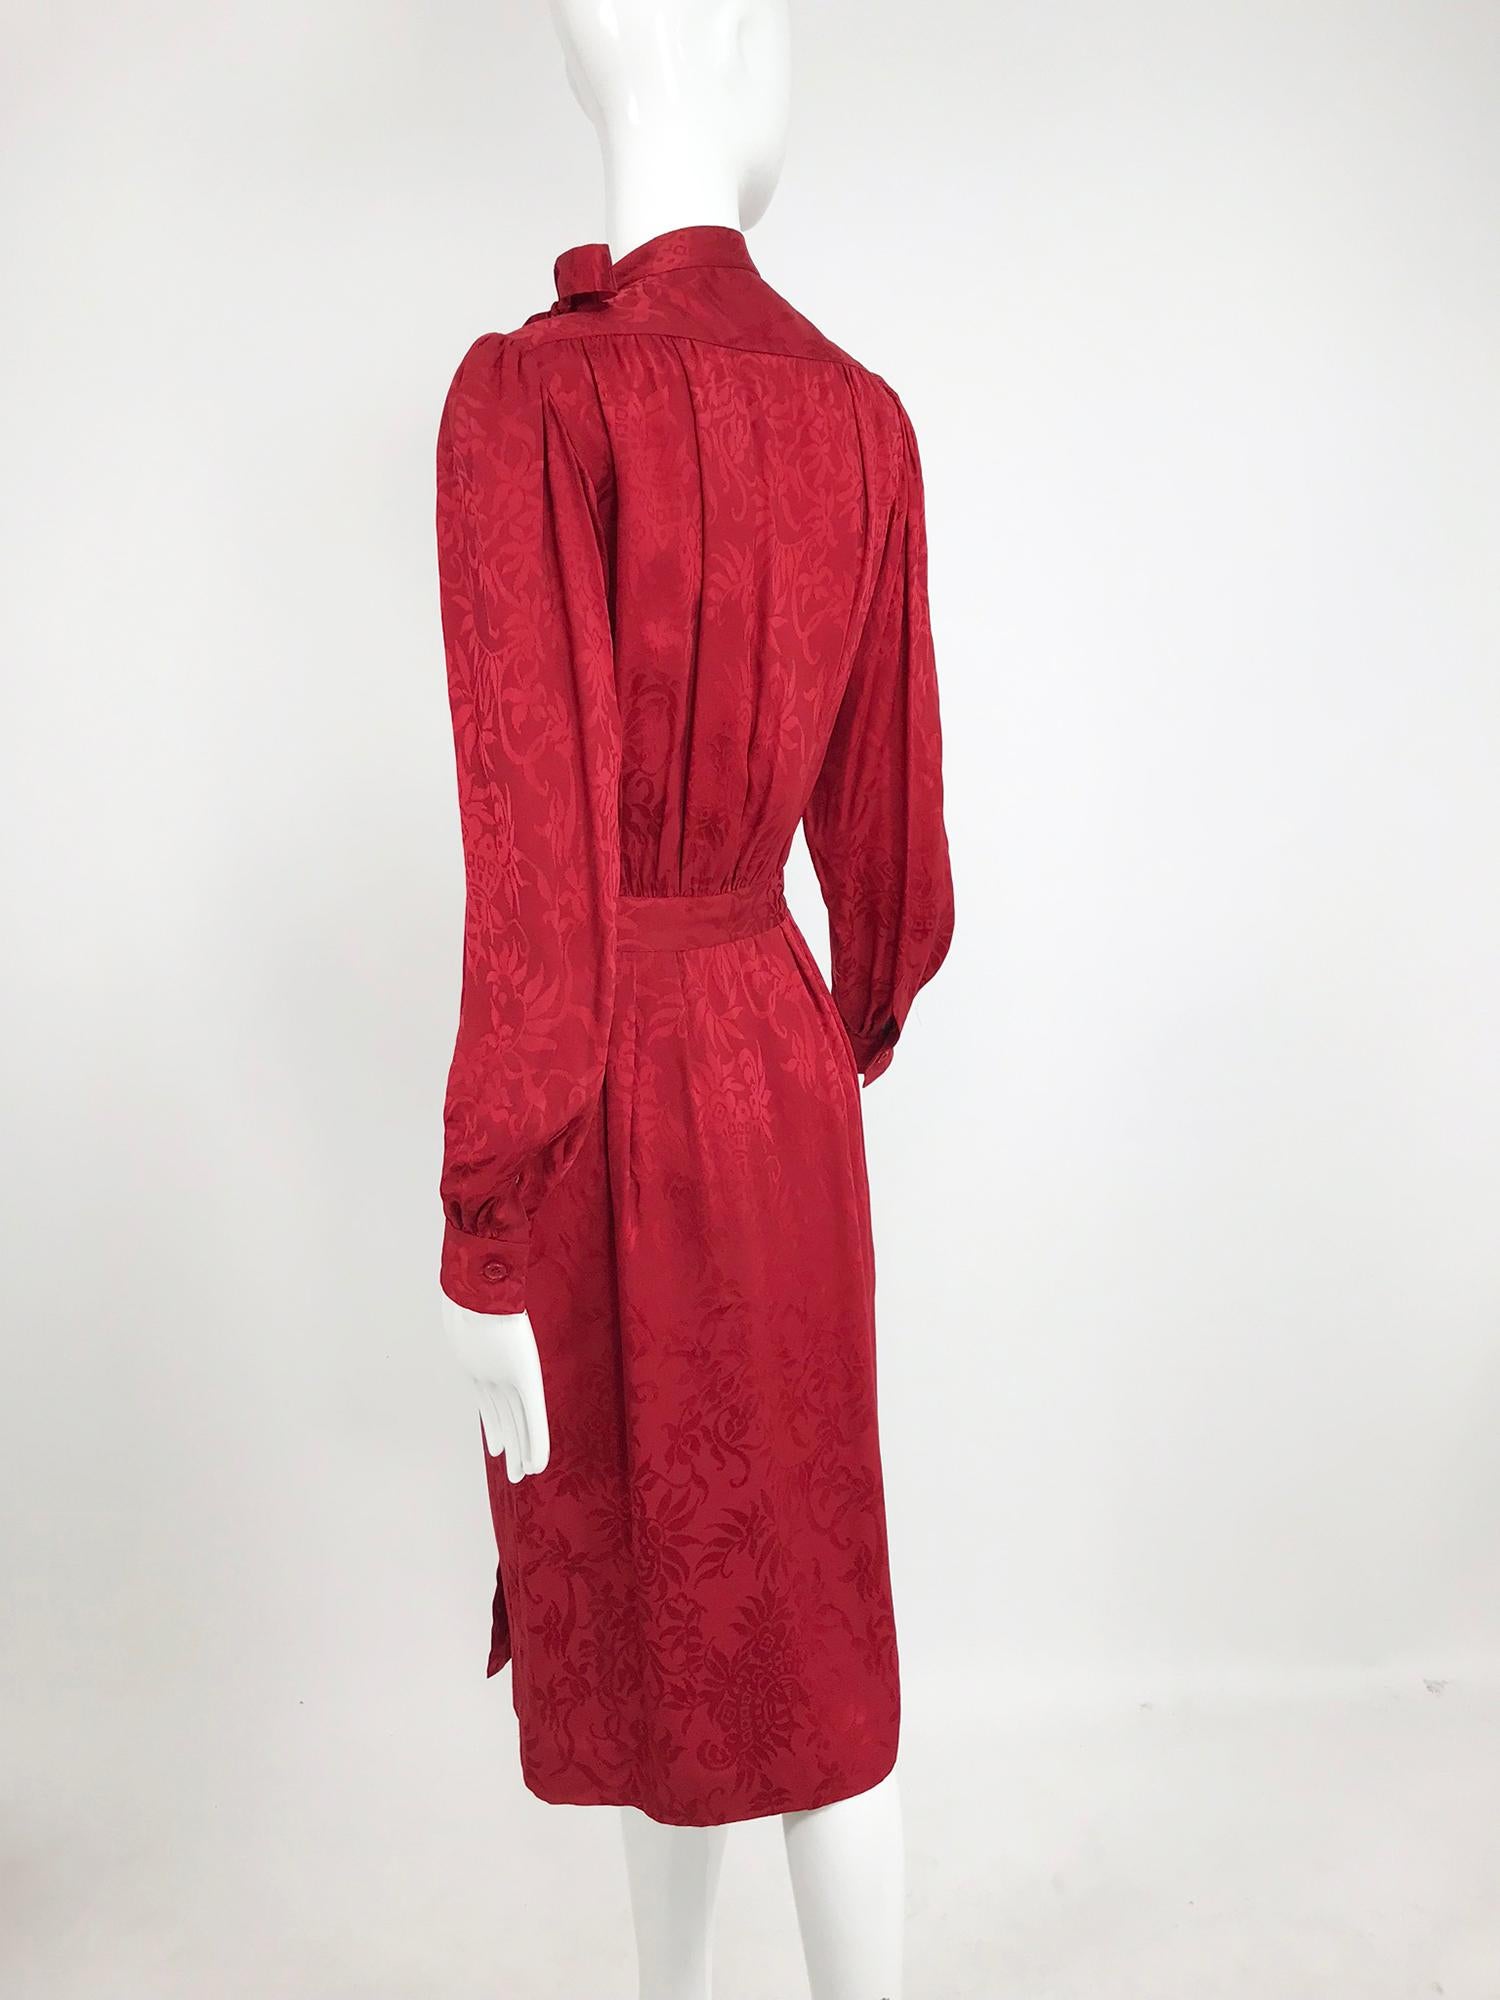 Yves Saint Laurent Red Silk Jacquard Bow Tie Dress 1970s 8